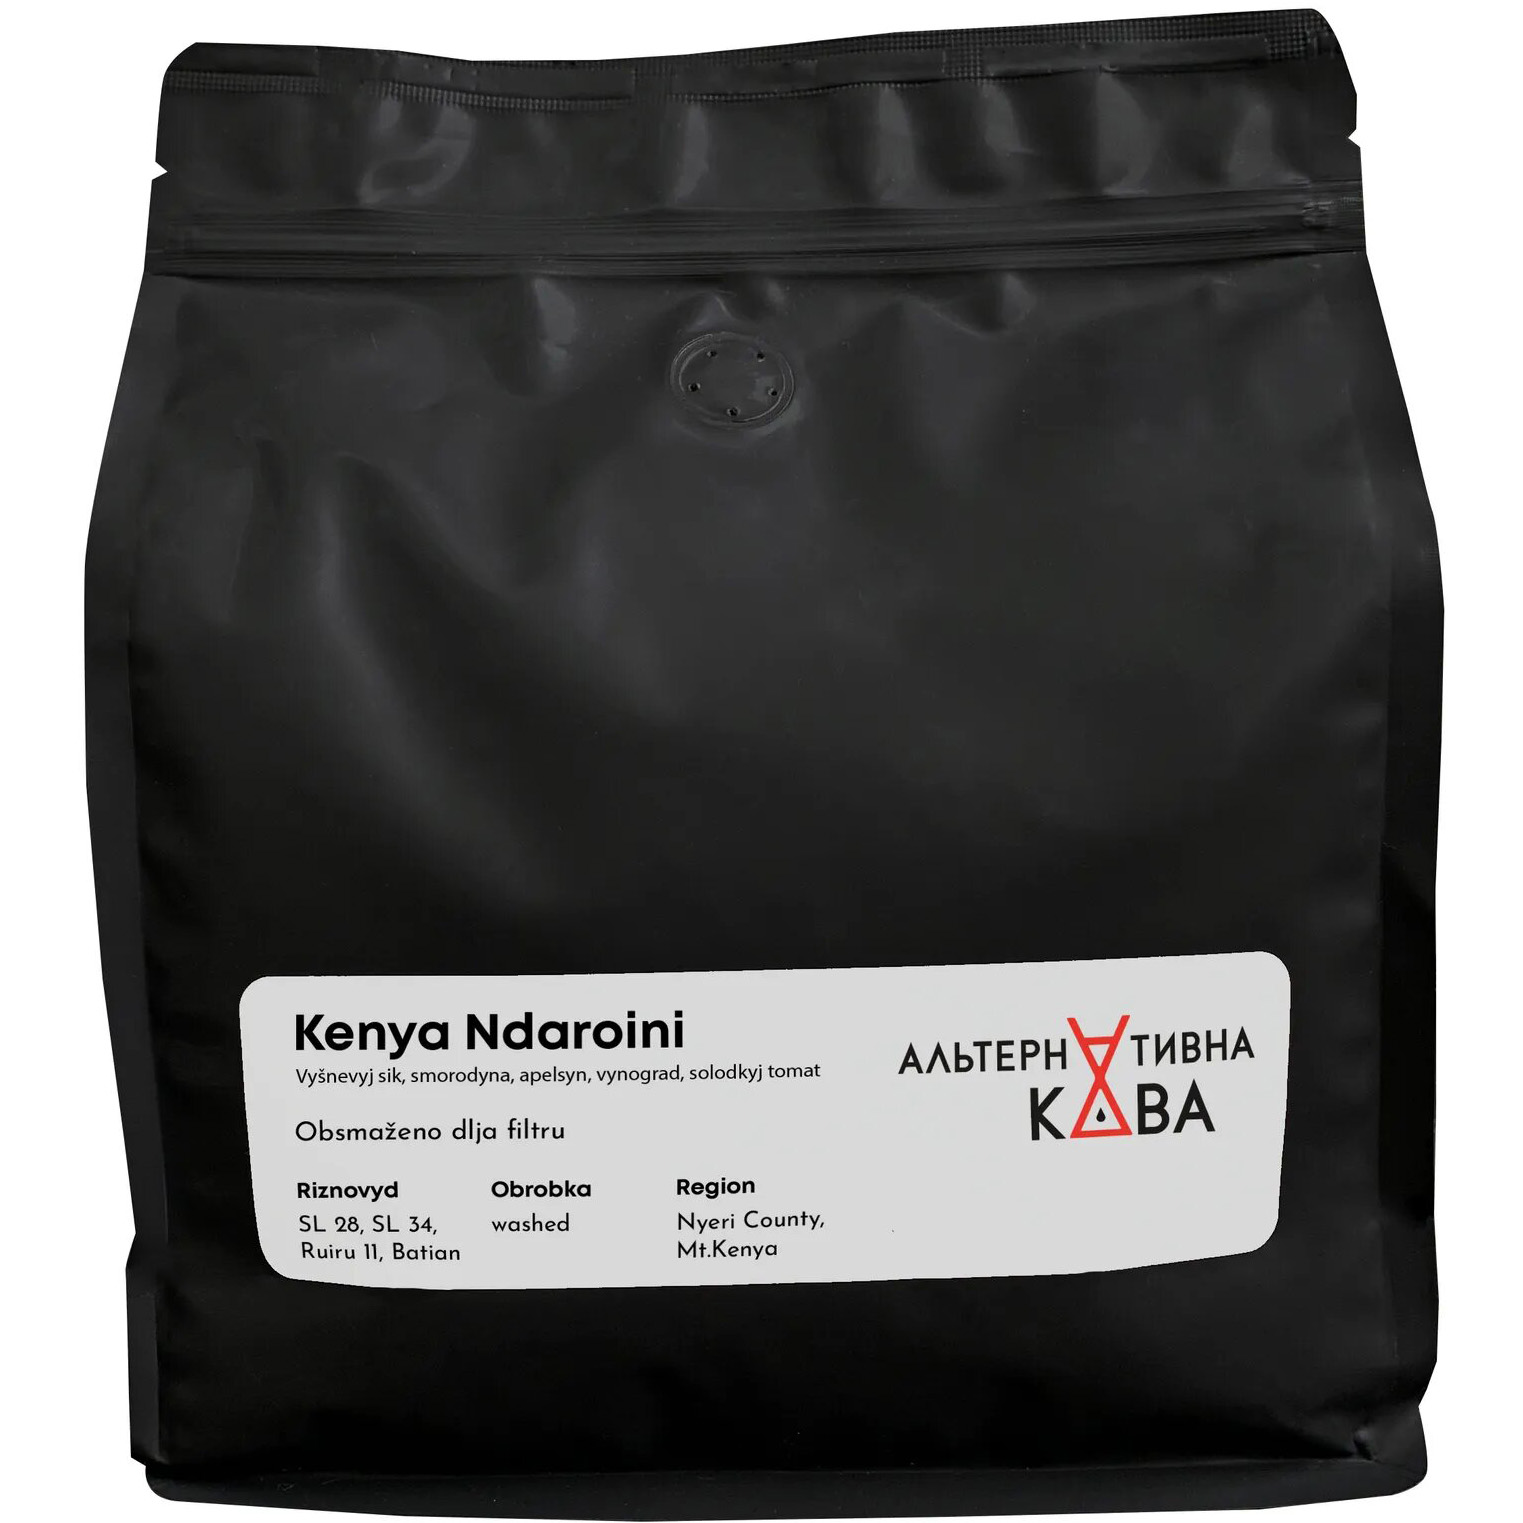 Кава в зернах Альтернативна Кава Kenya Ndaroini арабіка 1 кг - фото 1